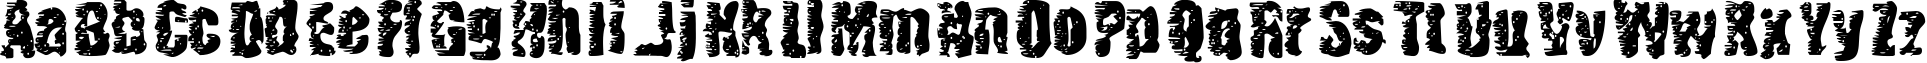 Пример написания английского алфавита шрифтом BN BenWitch Project